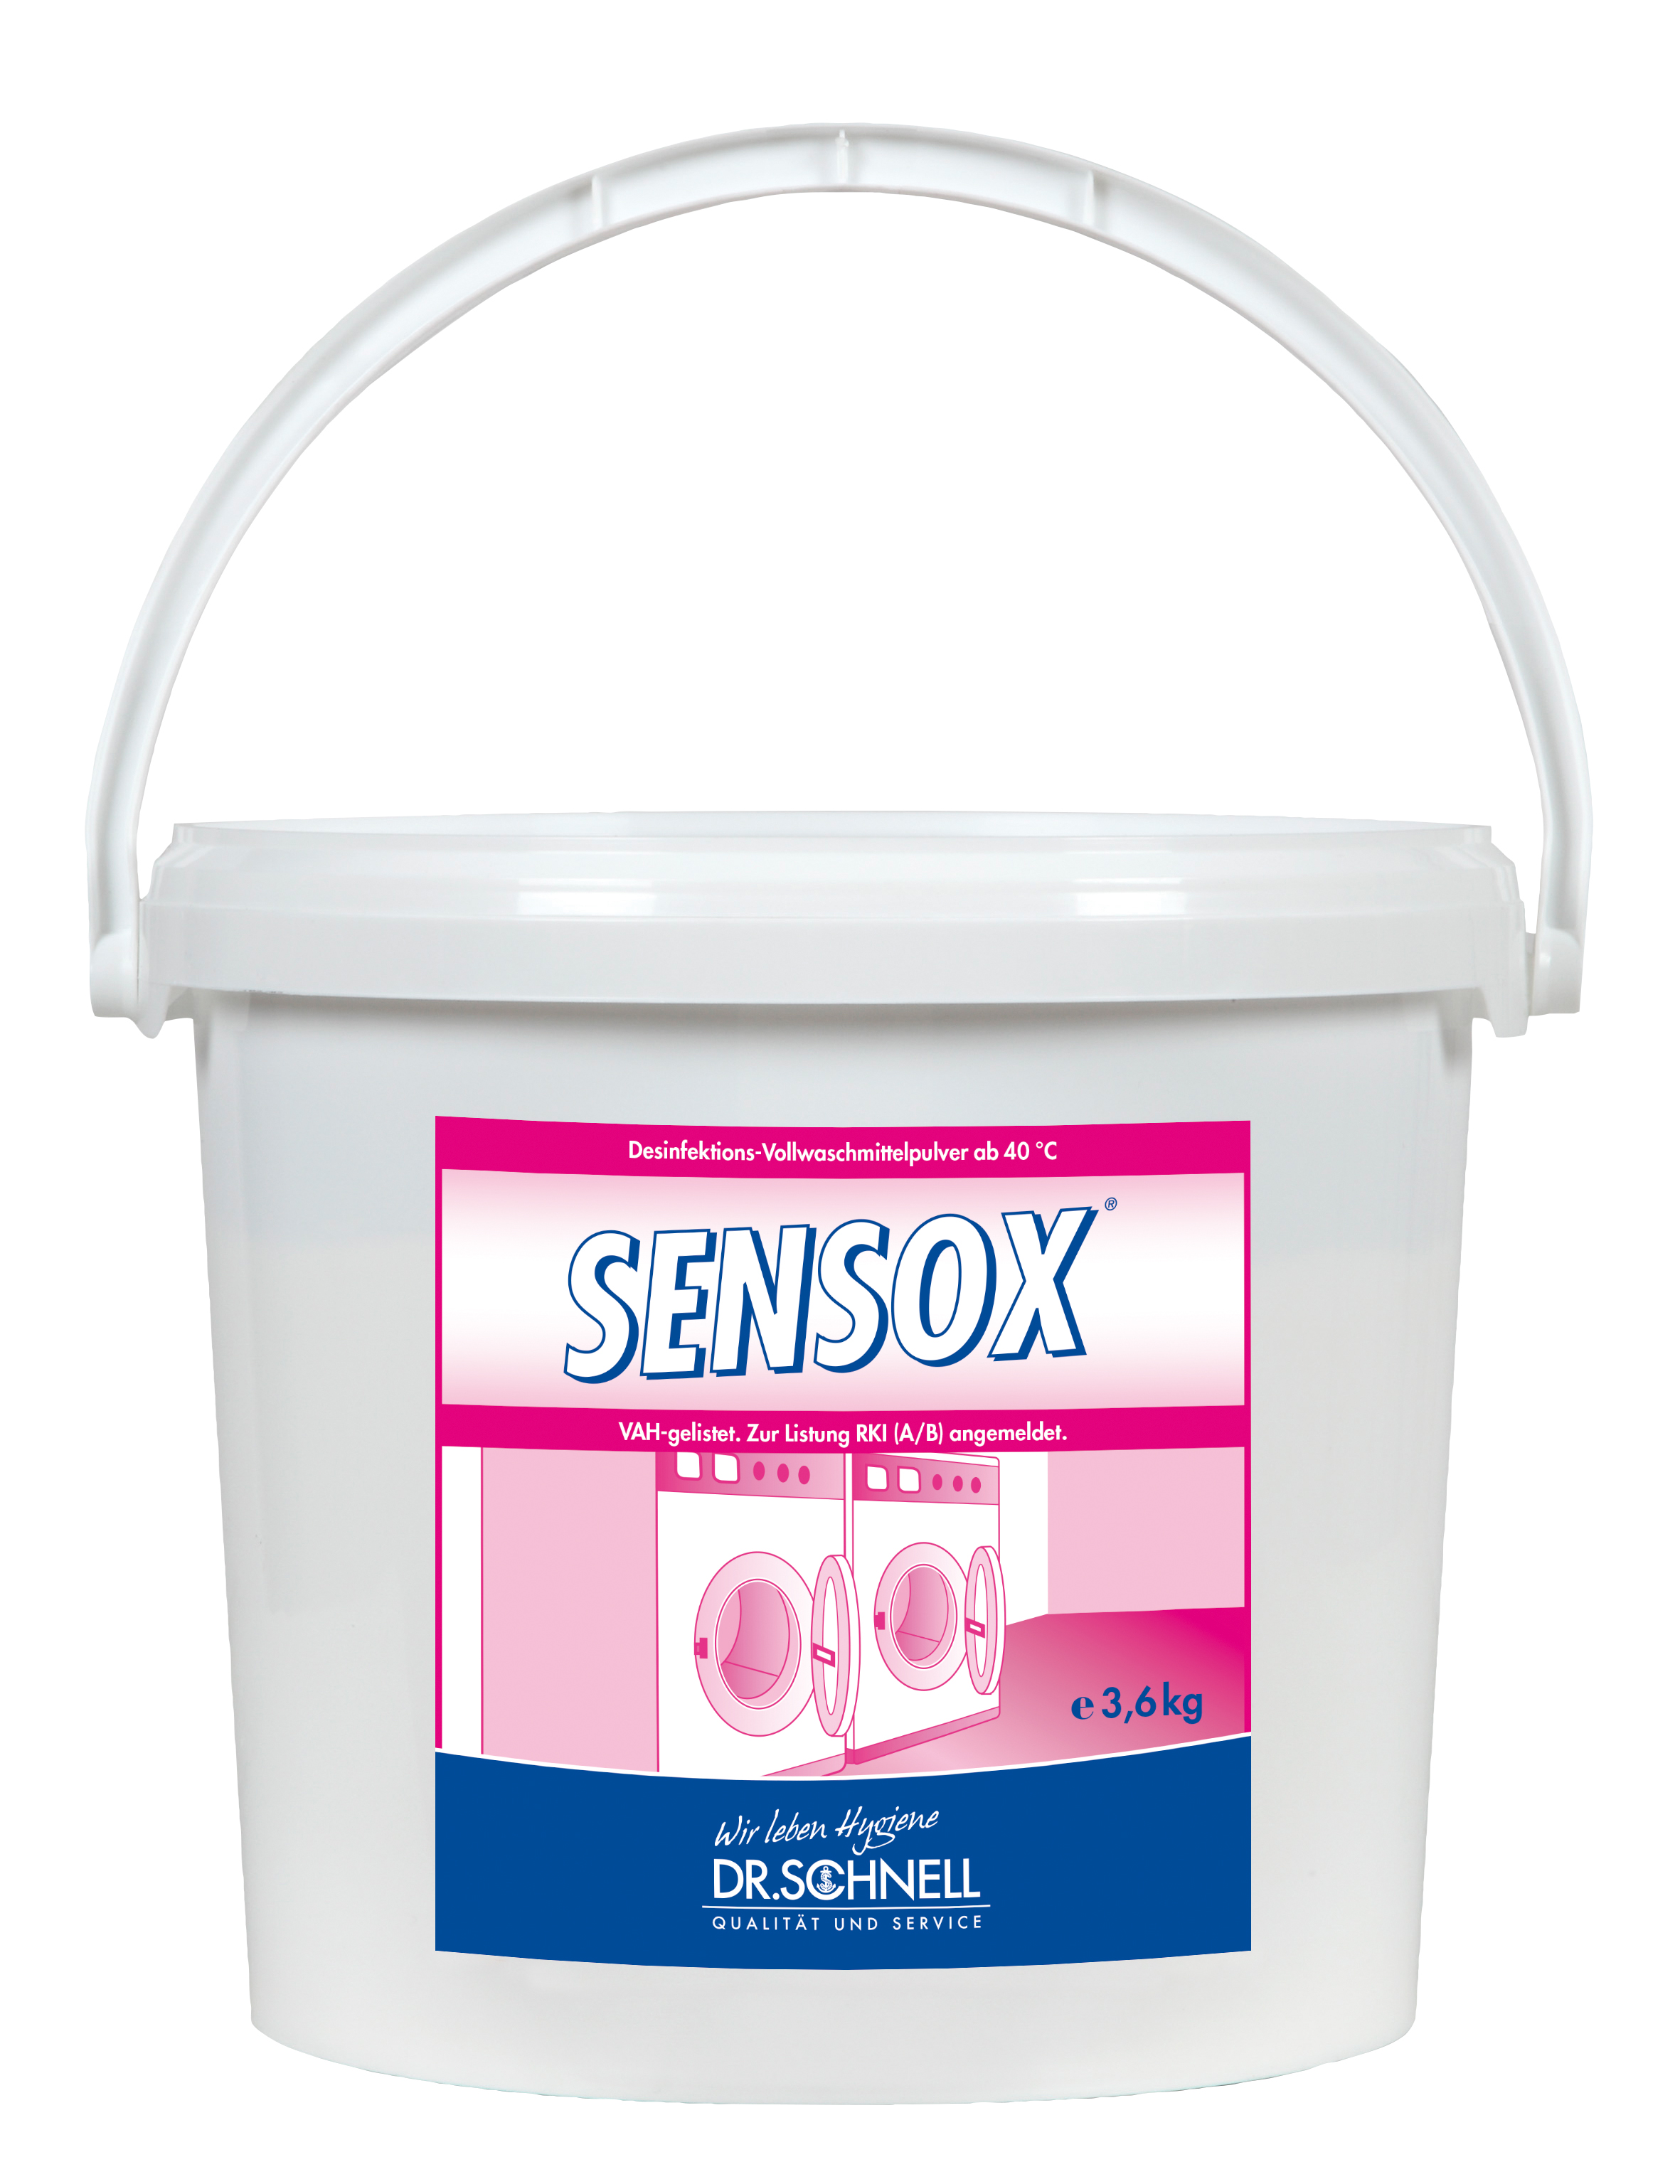 Sensox Wäschedesinfektion ab 40°C, VAH gelistet, 3,6 kg